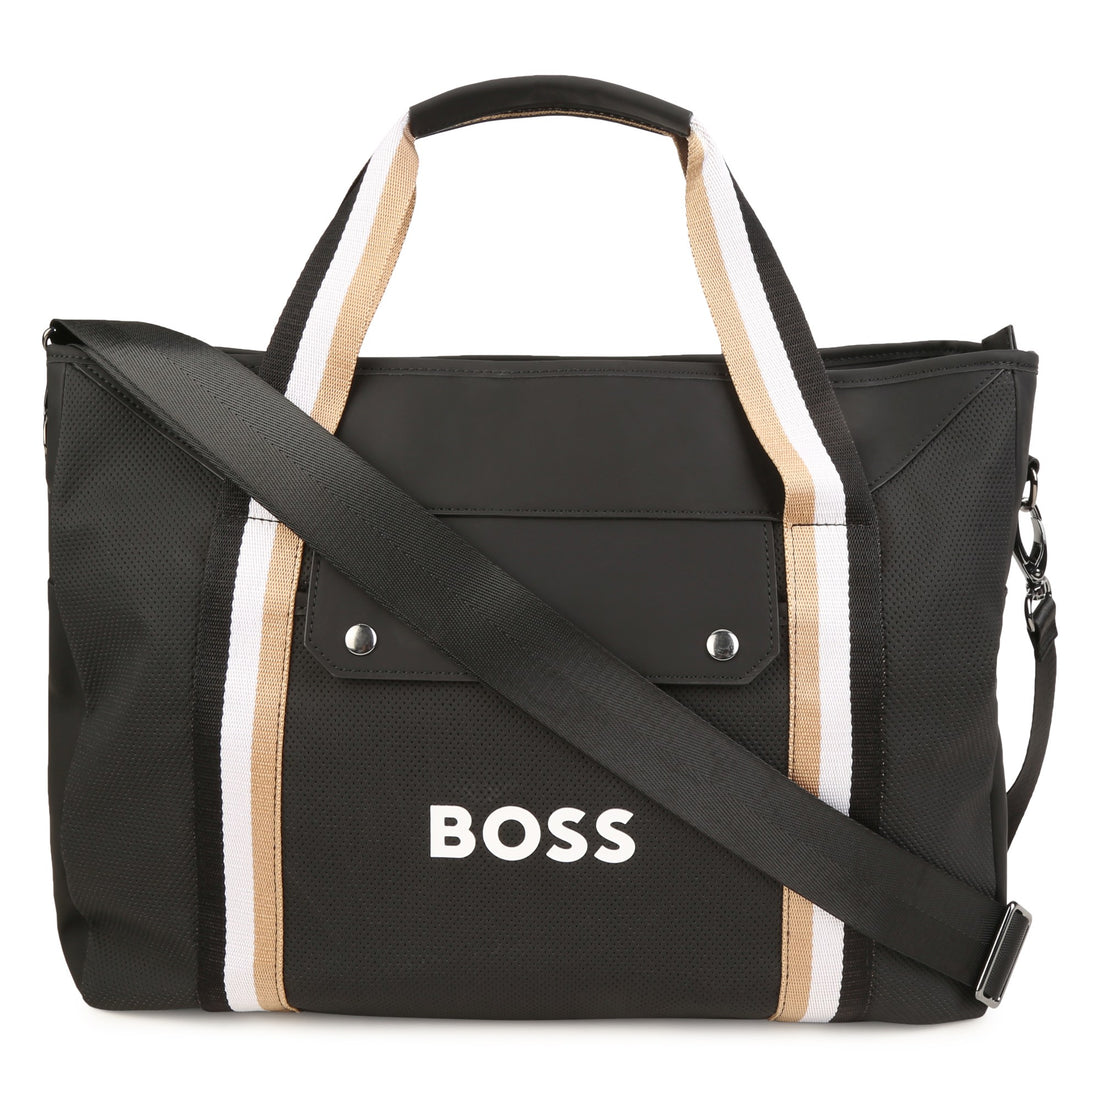 Hugo Boss Changing Bag Style: J90336